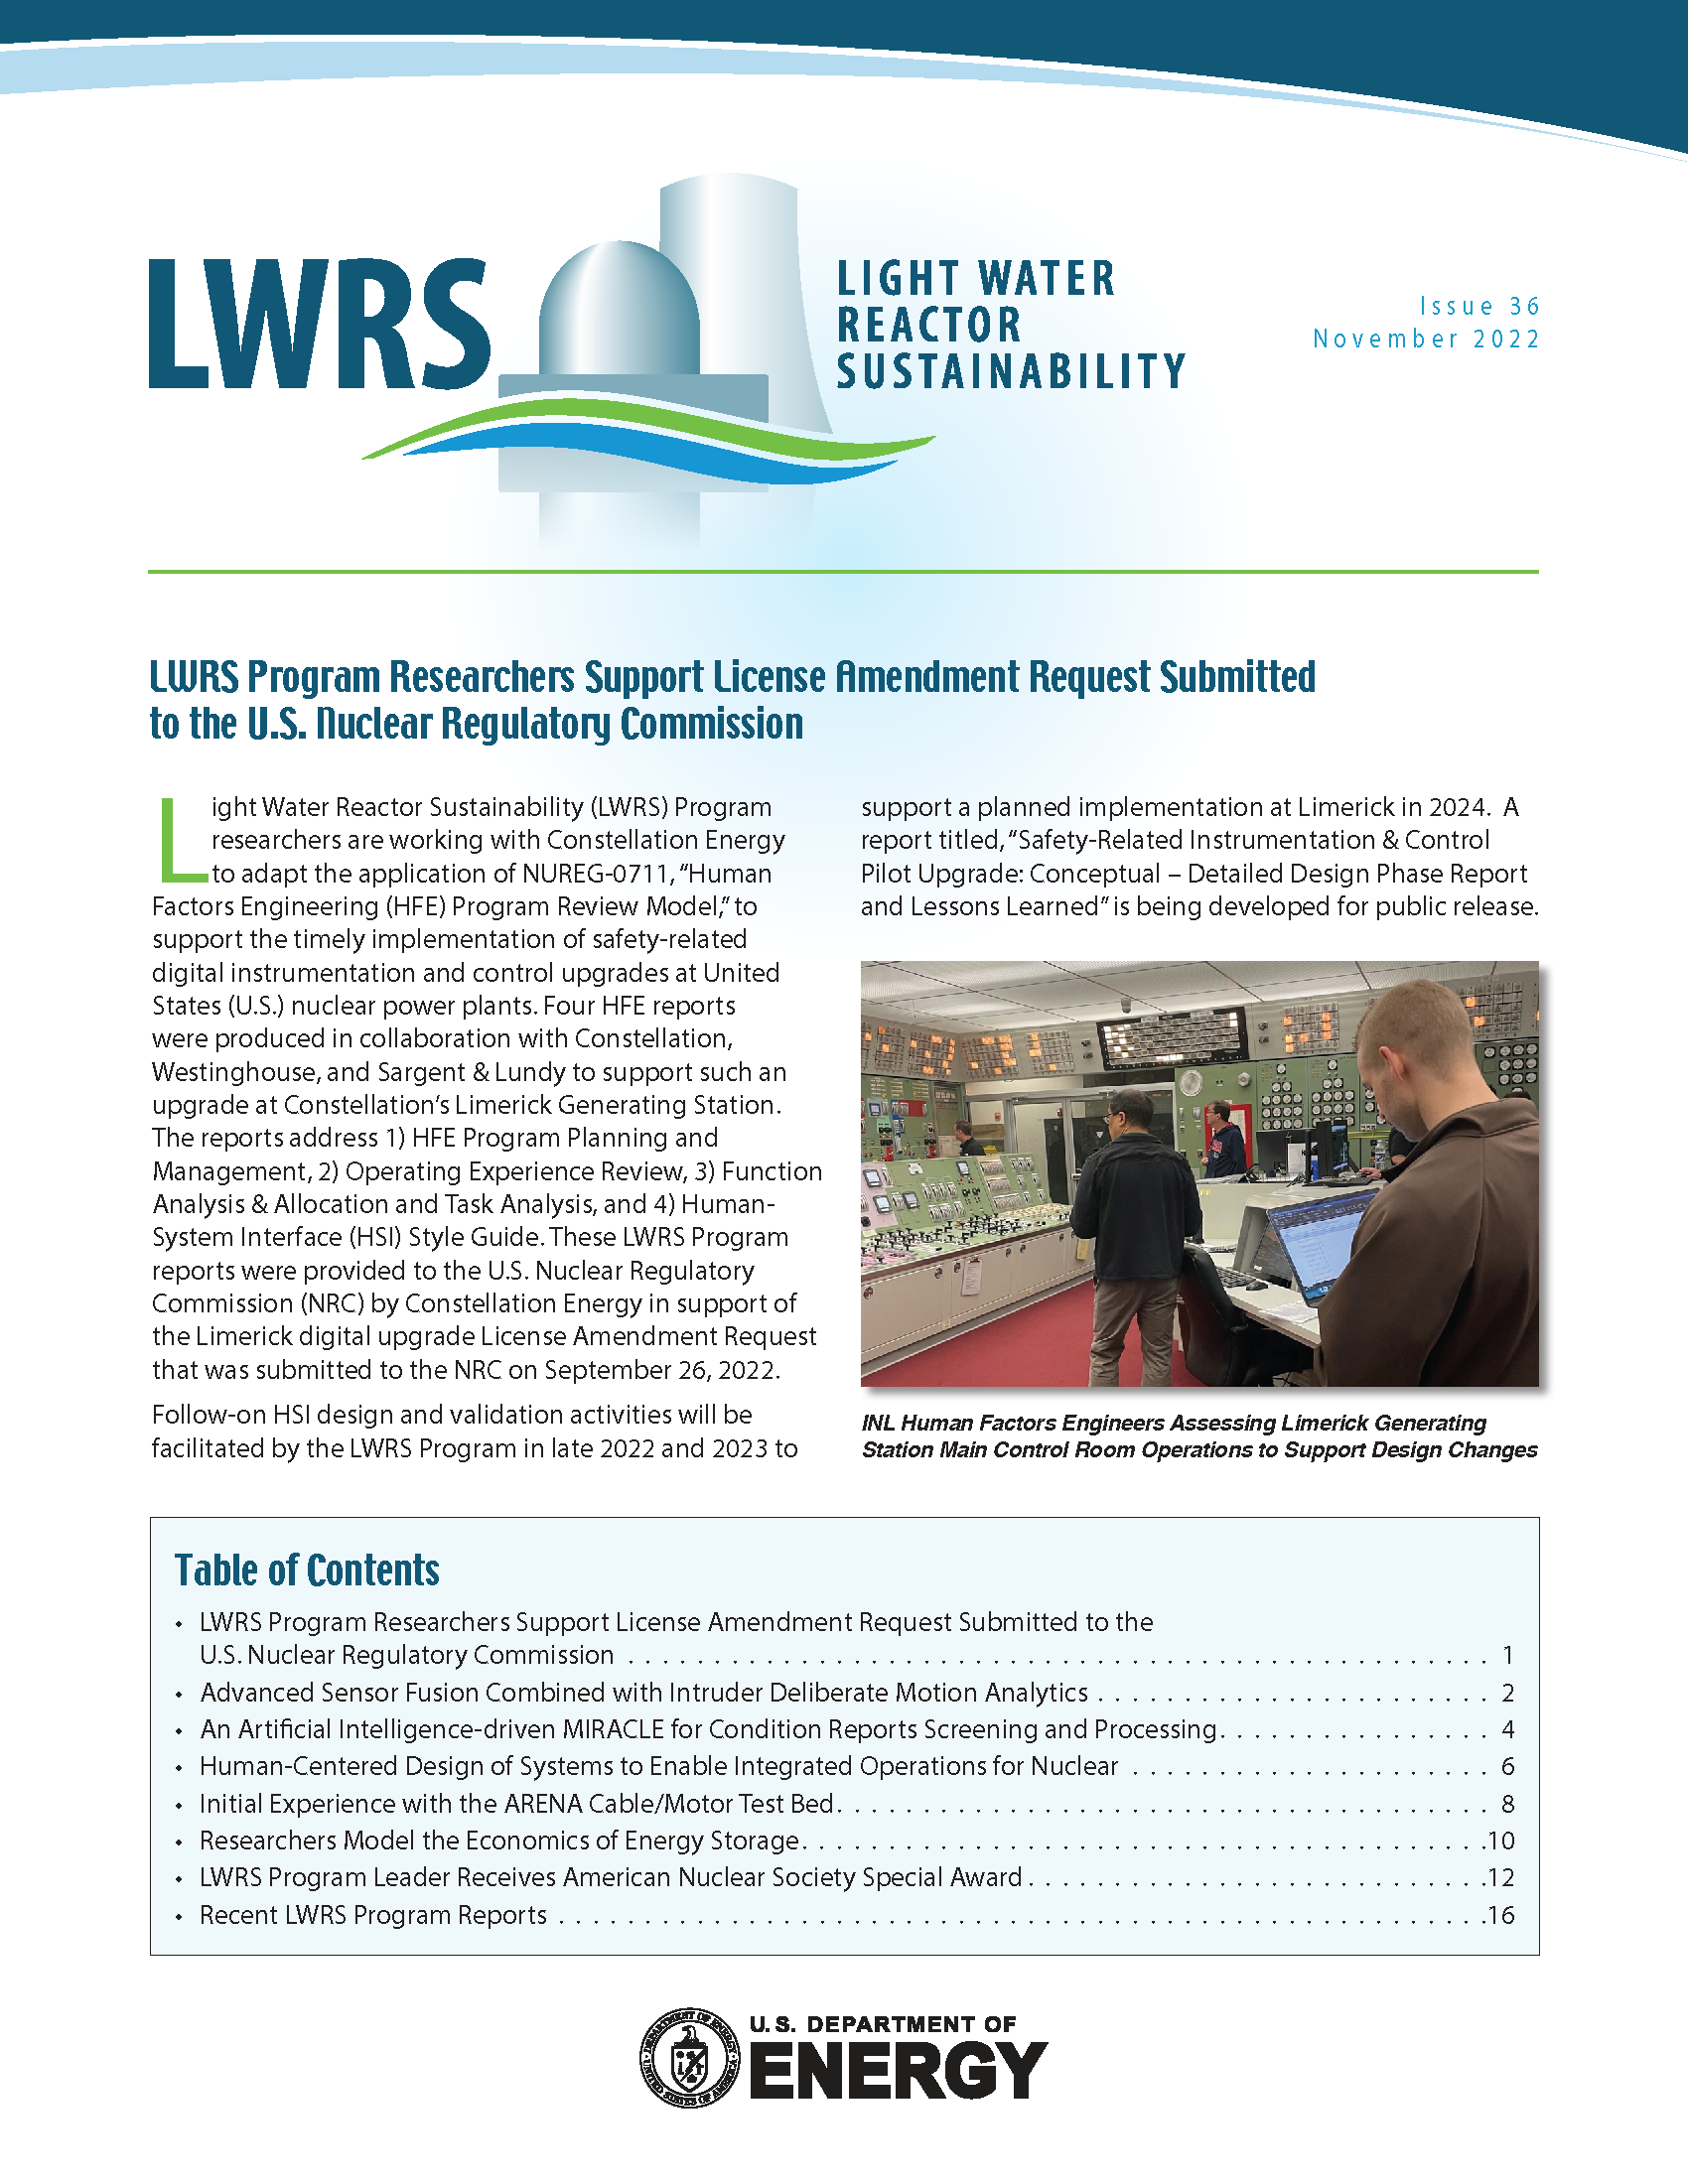 Light Water Reactor Sustainability Newsletter – Issue 36, November 2022